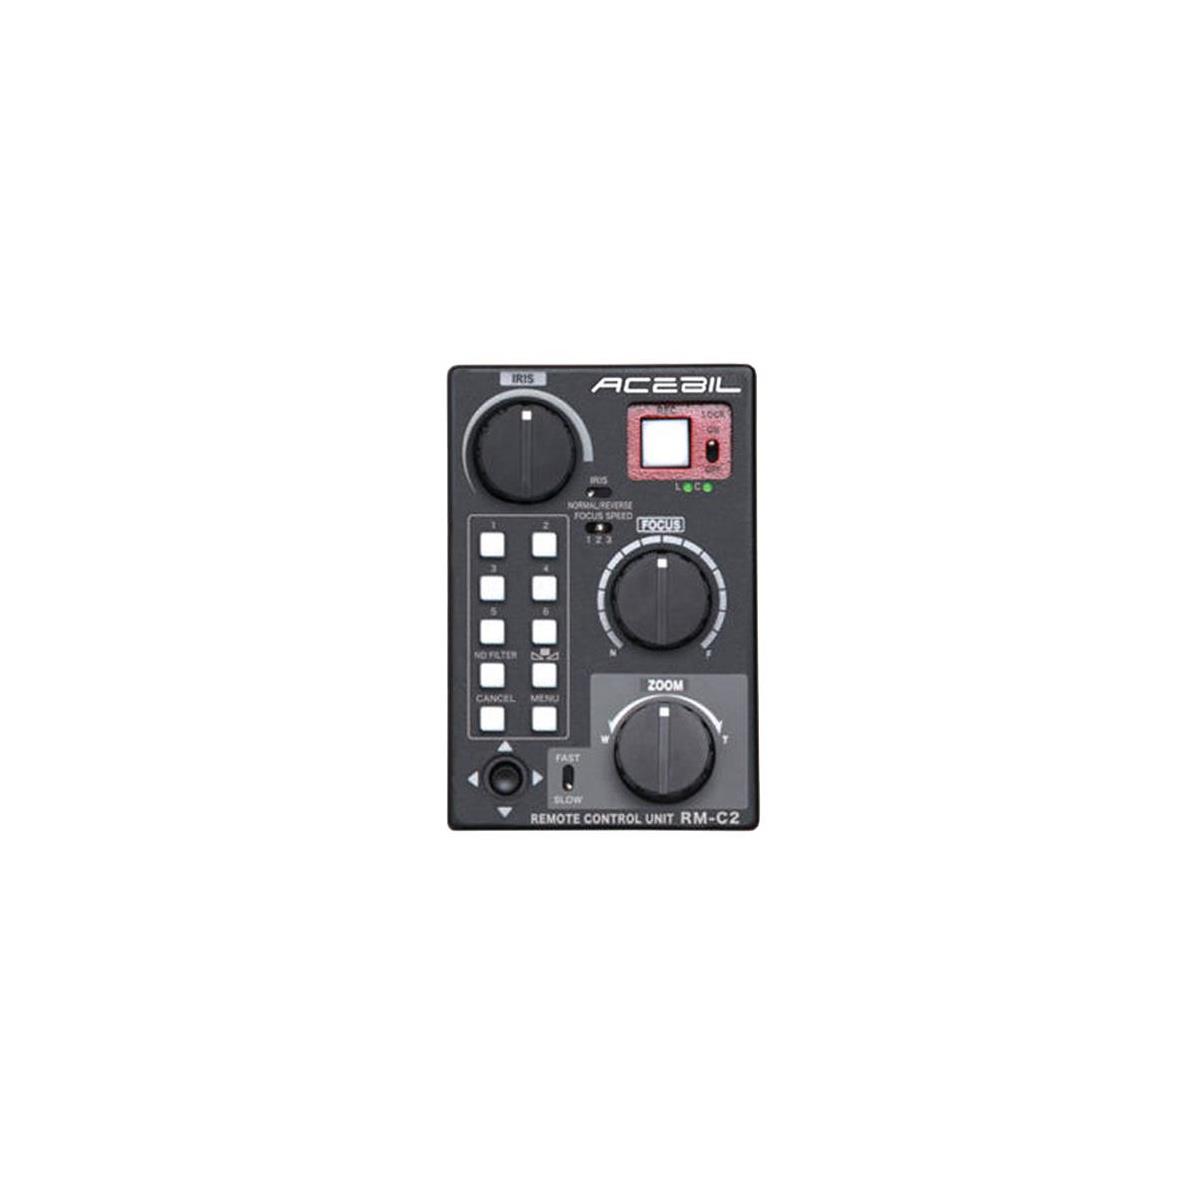 Pro Zoom/Focus/Iris Lens Remote Control Box for Canon LANC - Acebil RM-C2